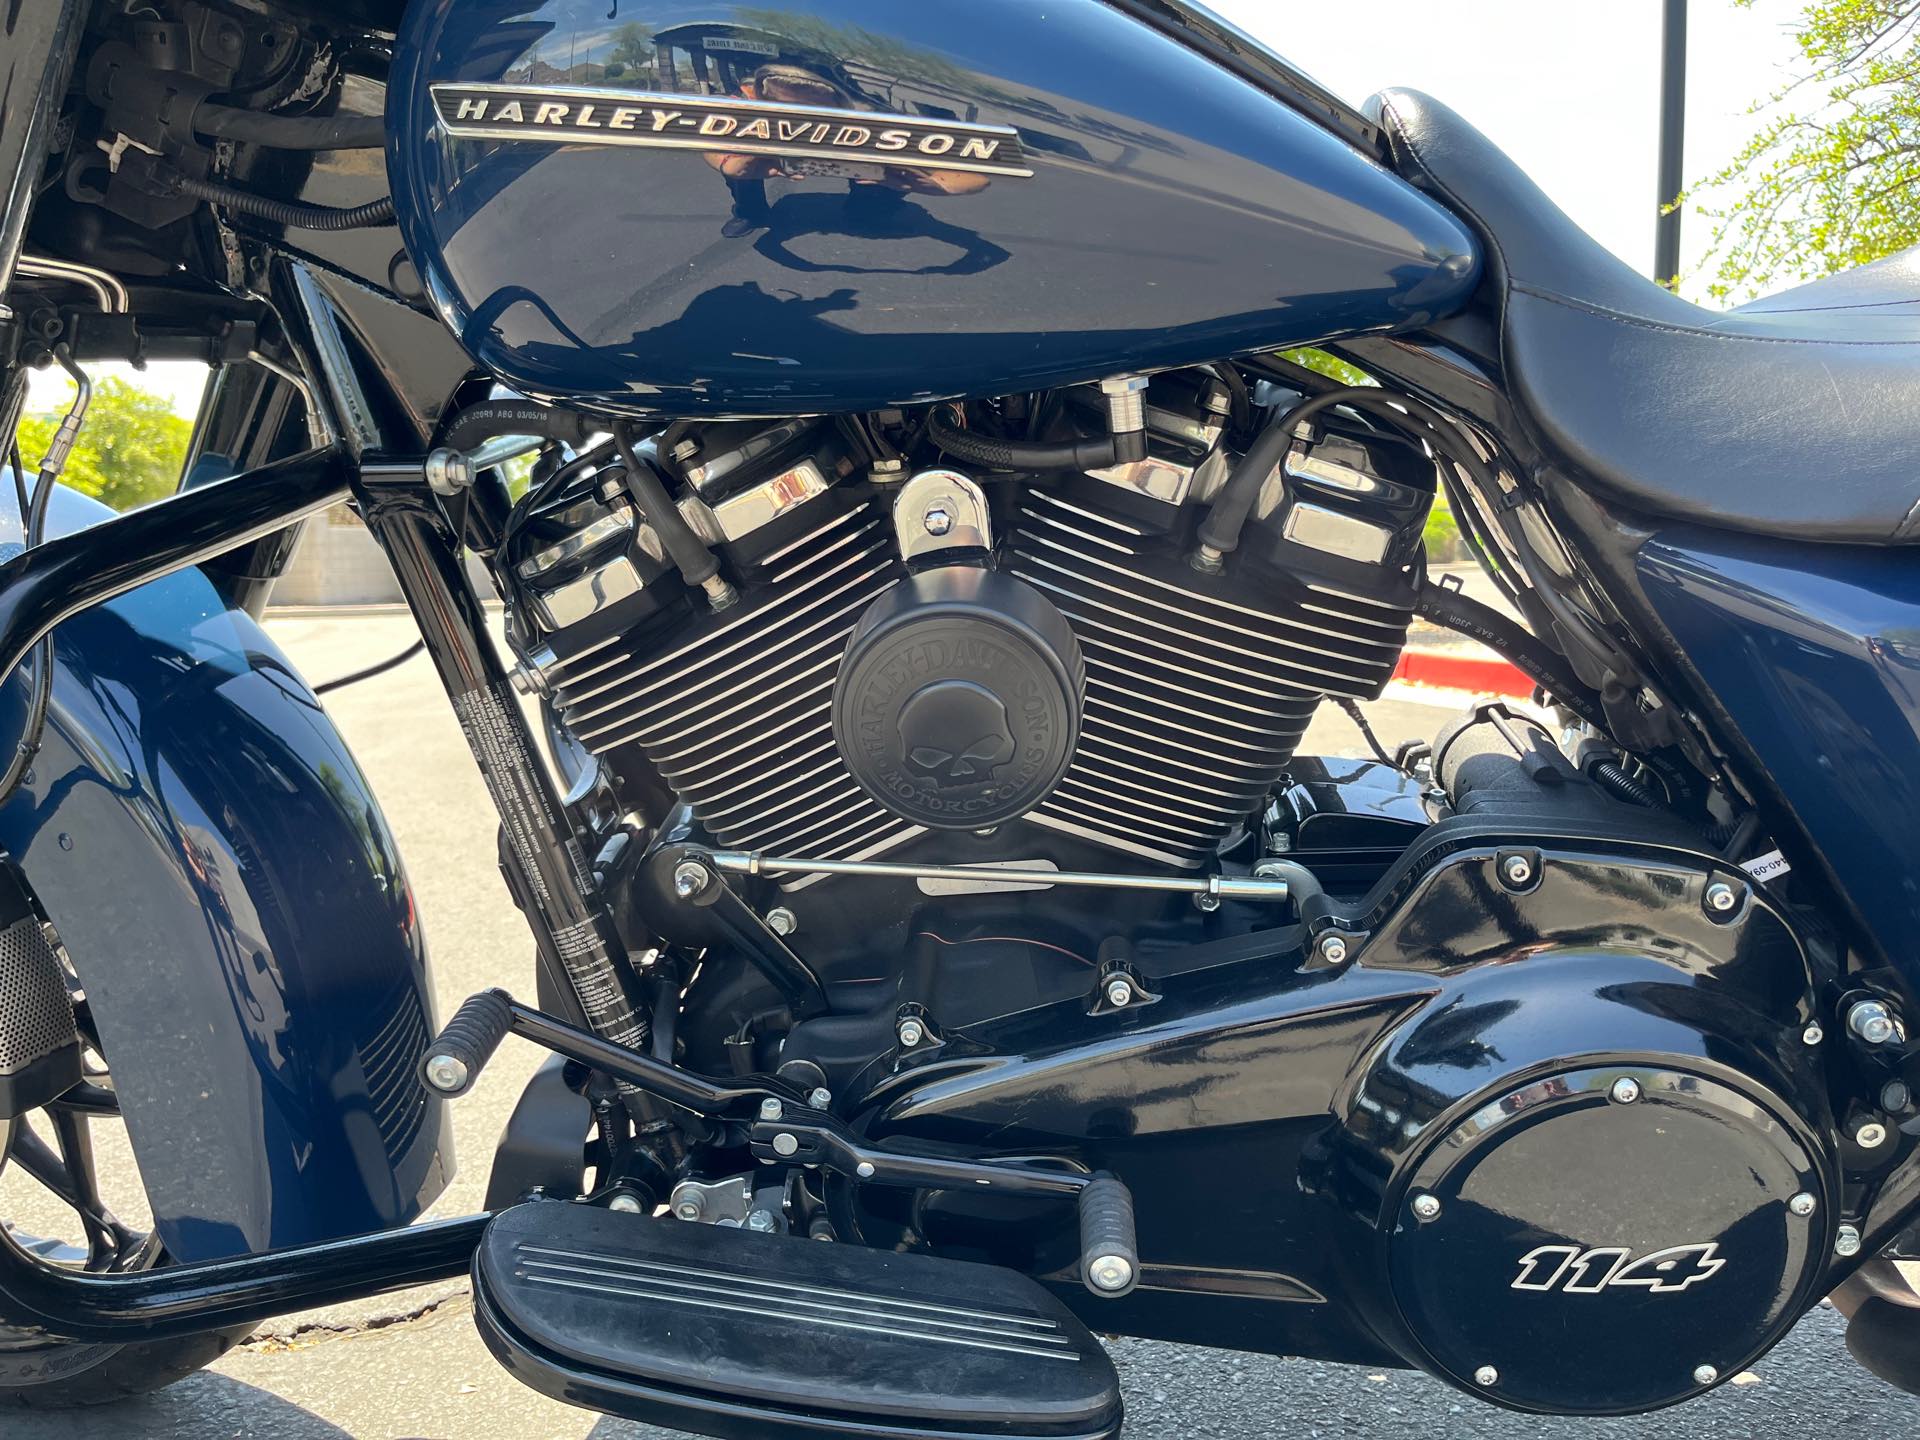 2019 Harley-Davidson Street Glide Special at Buddy Stubbs Arizona Harley-Davidson